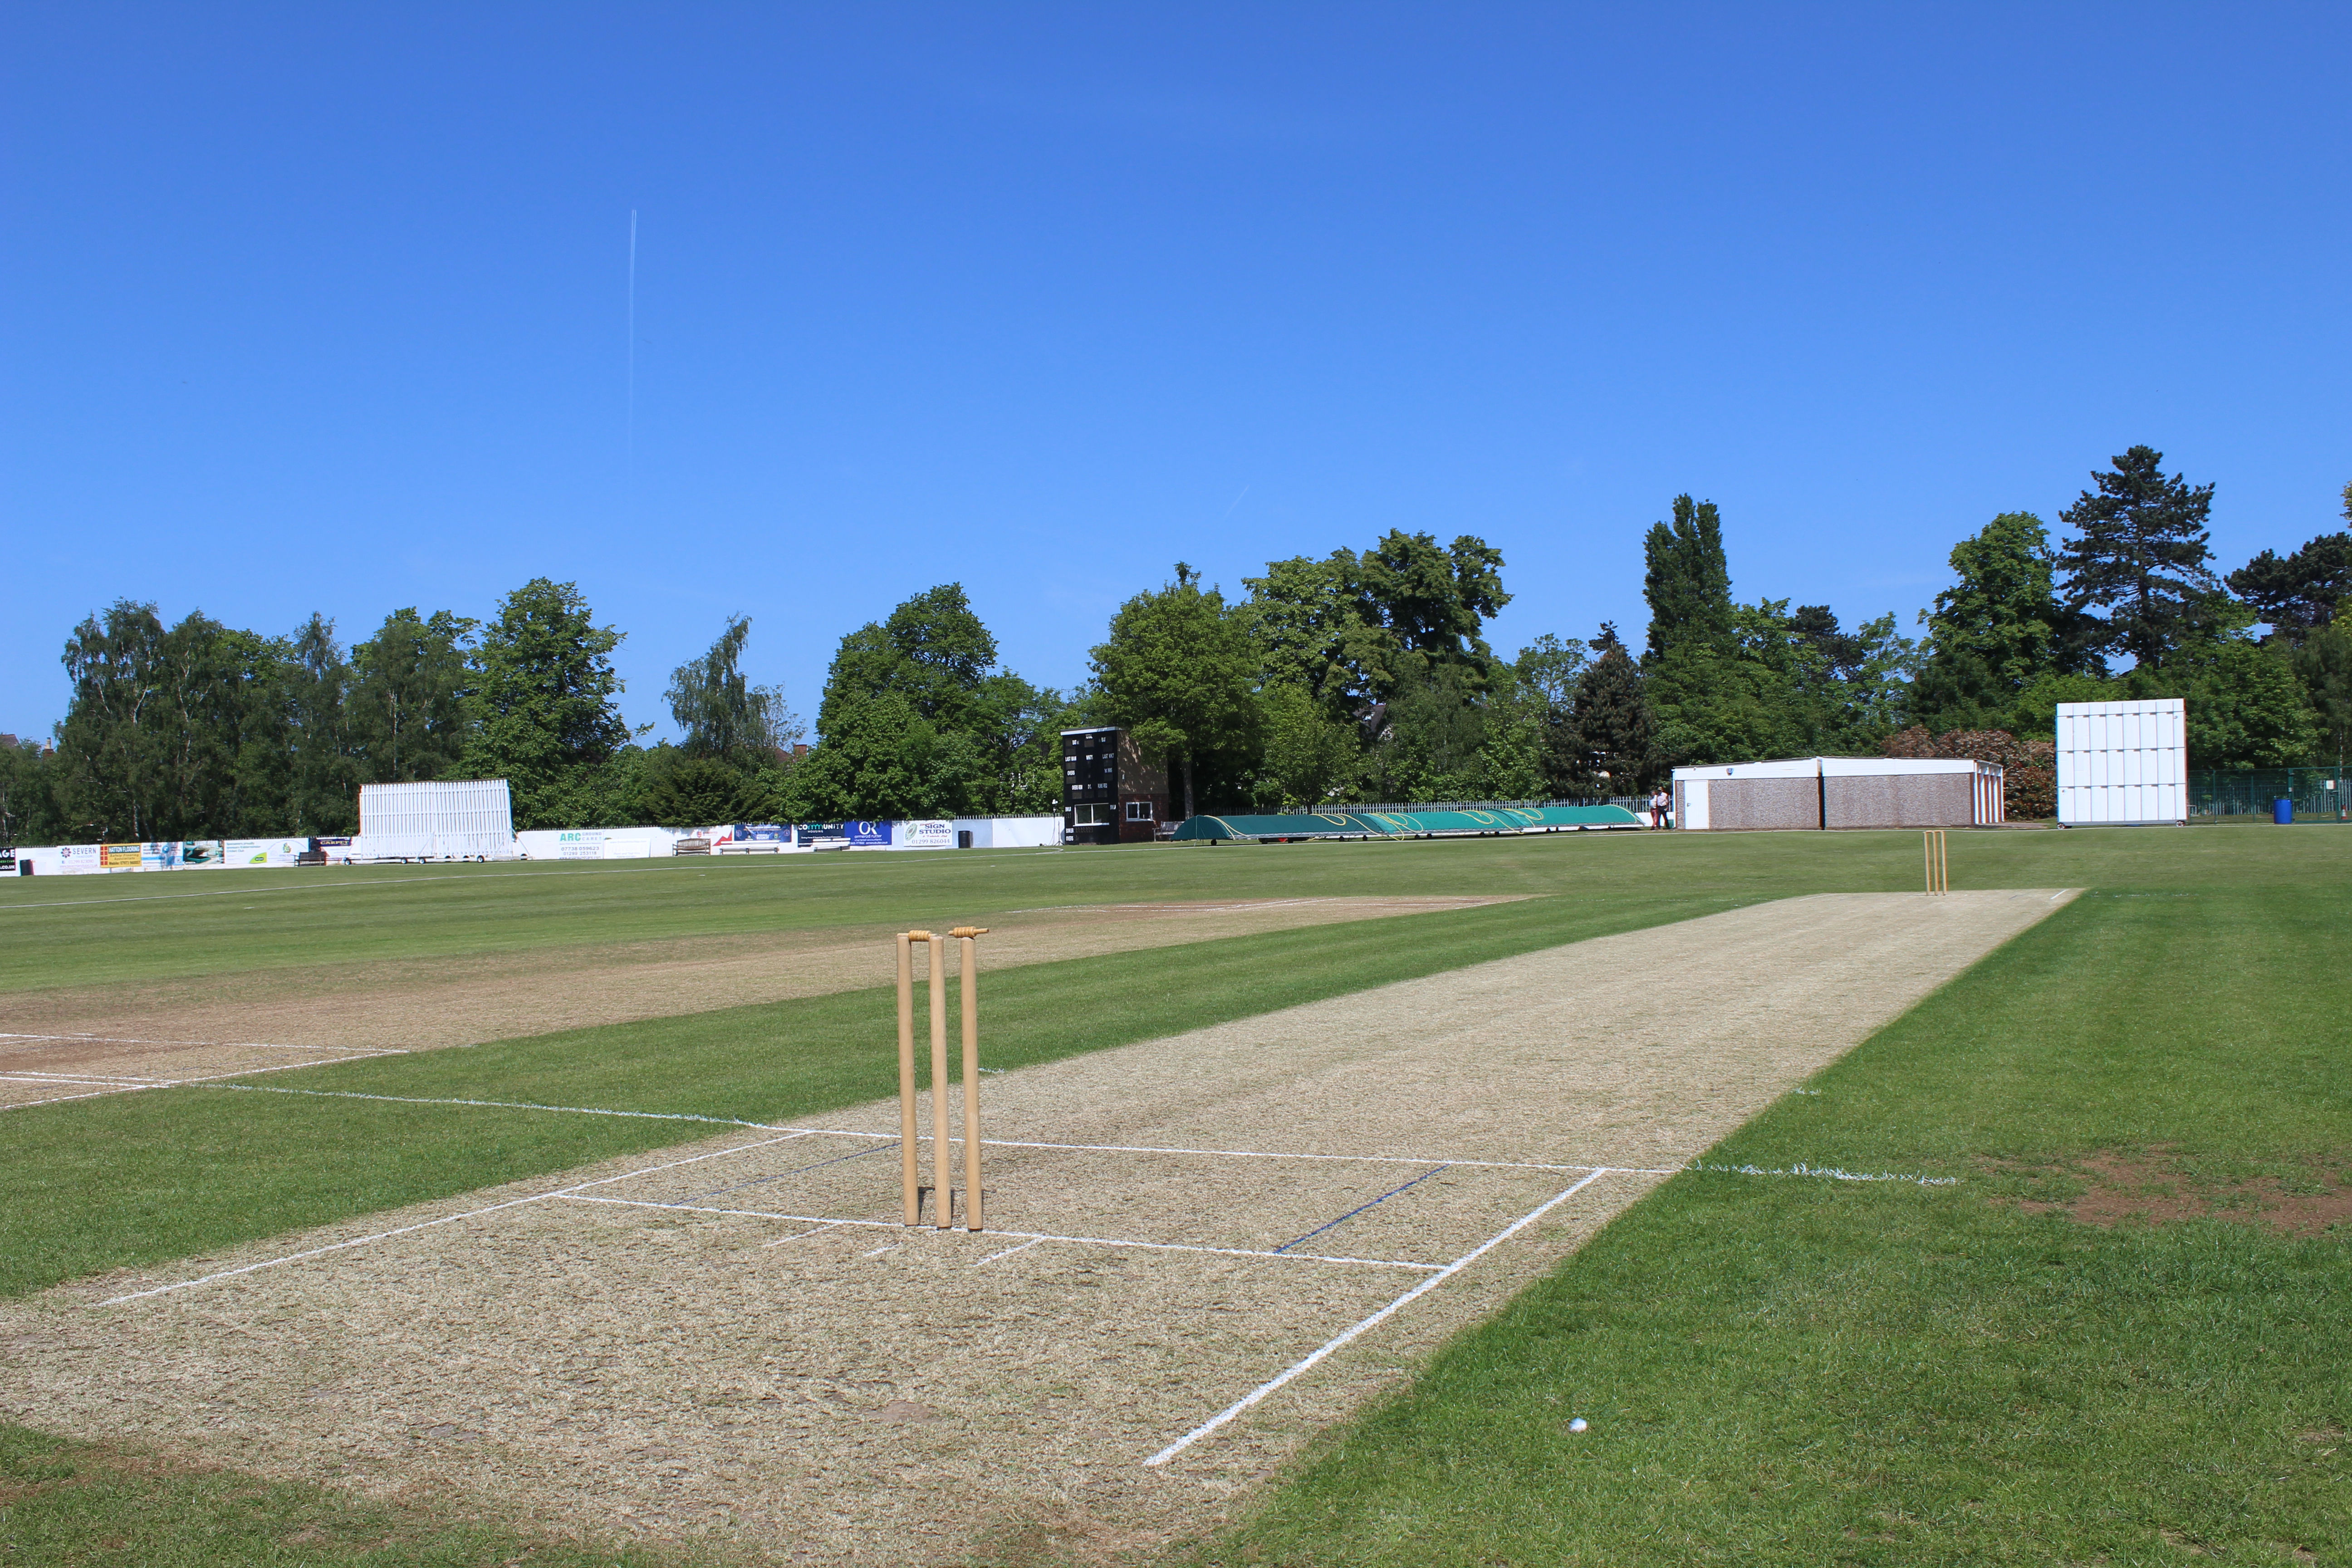 Ground hire at Kidderminster Cricket Club